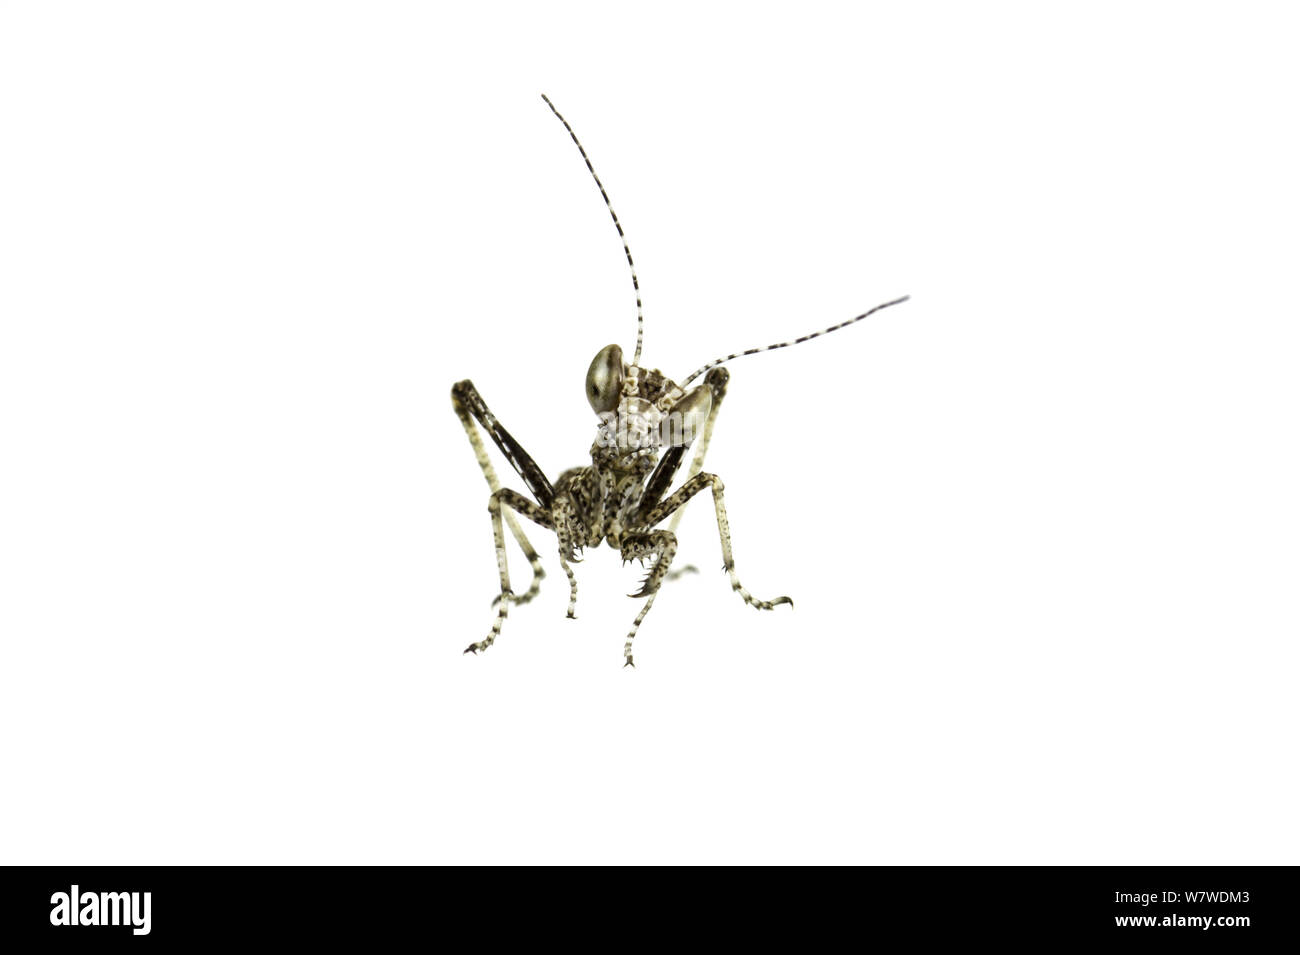 Wüste stick Mantis (Tarachodes sp.) Baby, 1 mm lang. Wüste Negev, Israel, Juli. Meetyourneighbors.net Projekt. Stockfoto